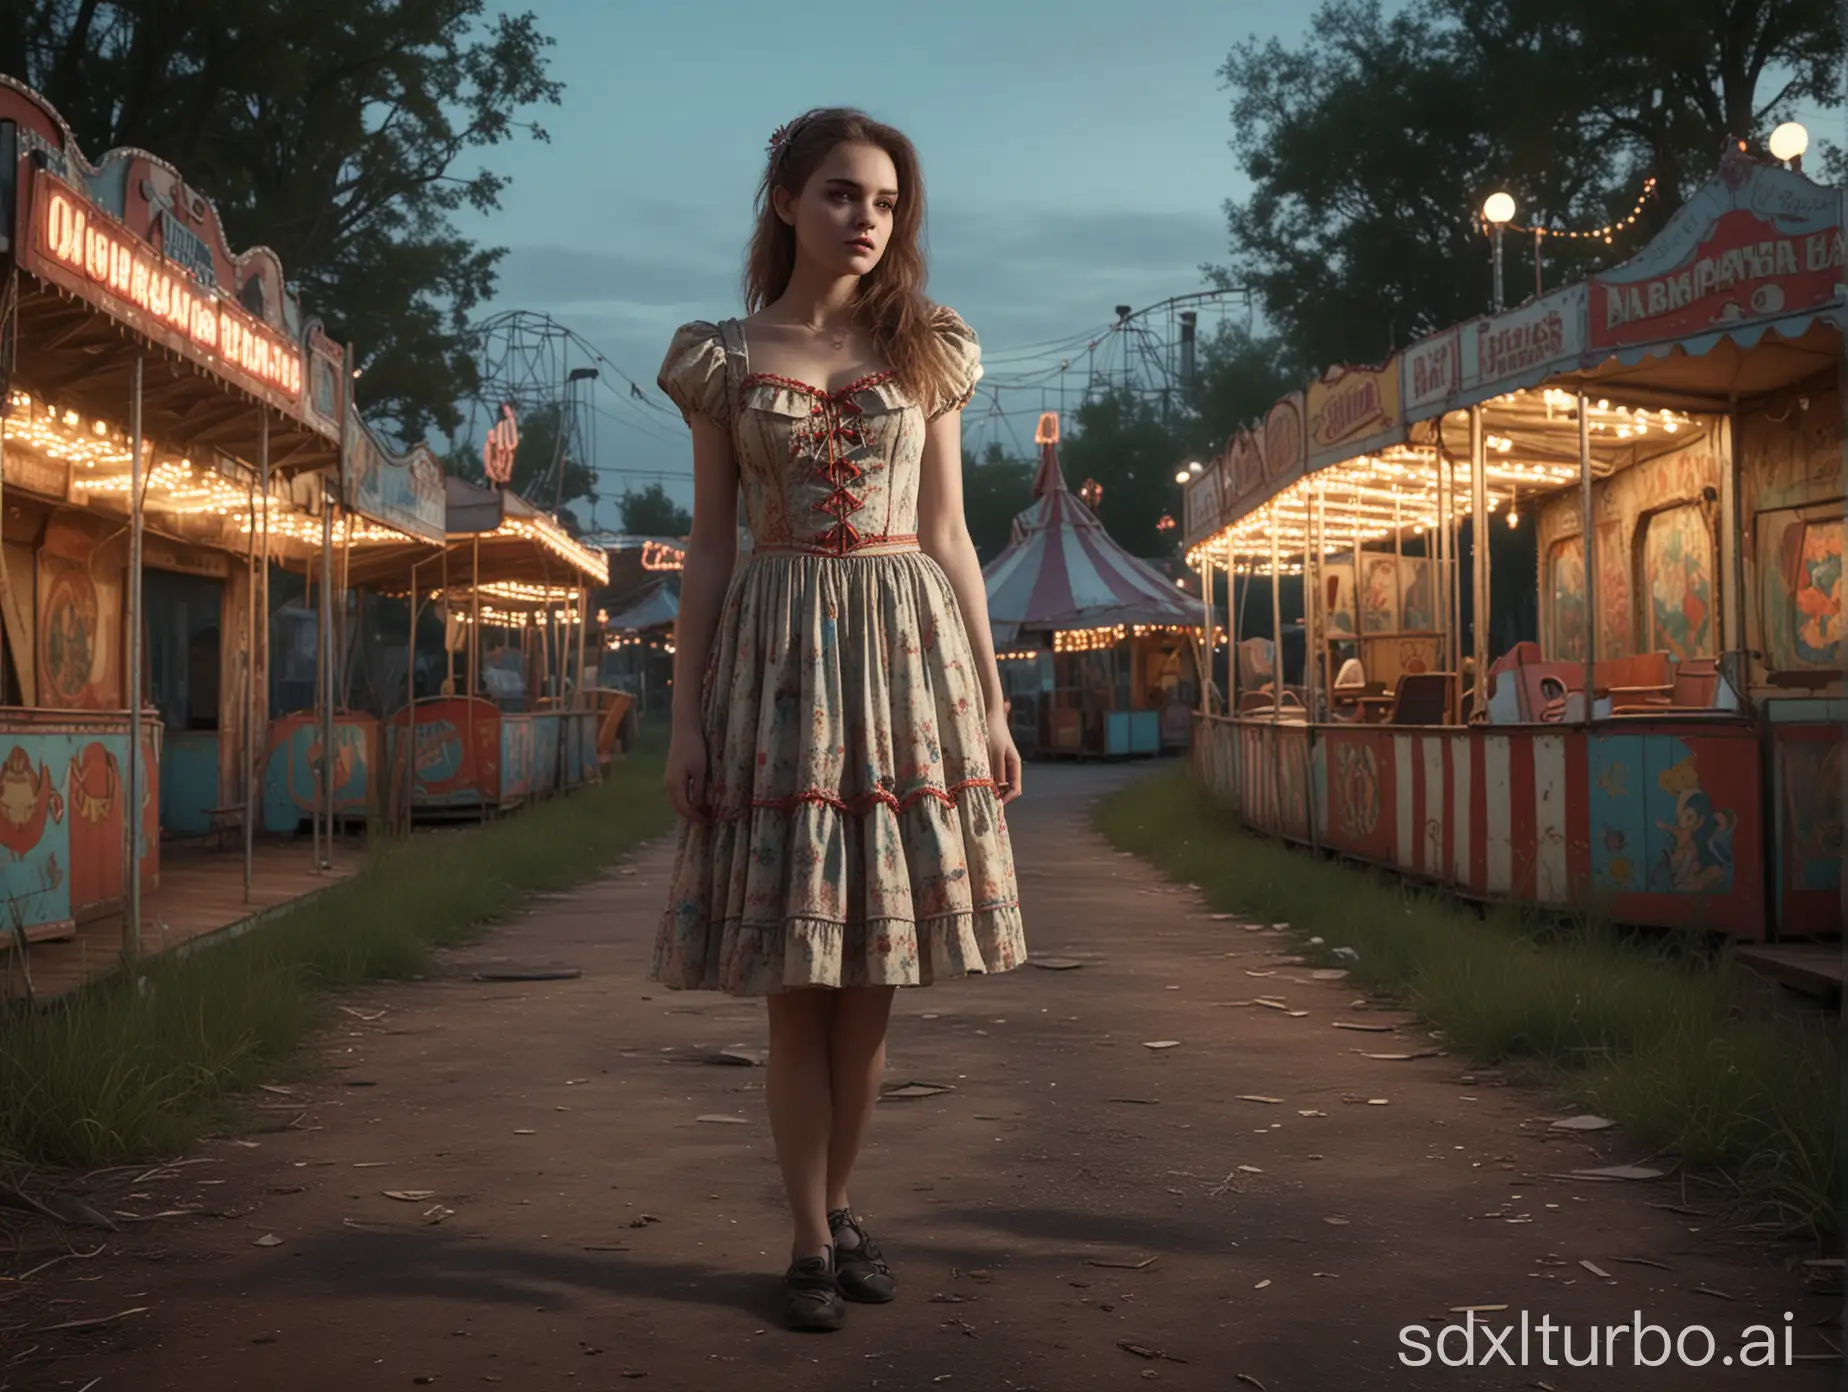 Twilight-Carnival-Girl-in-Vintage-Dress-Explores-Abandoned-Amusement-Park